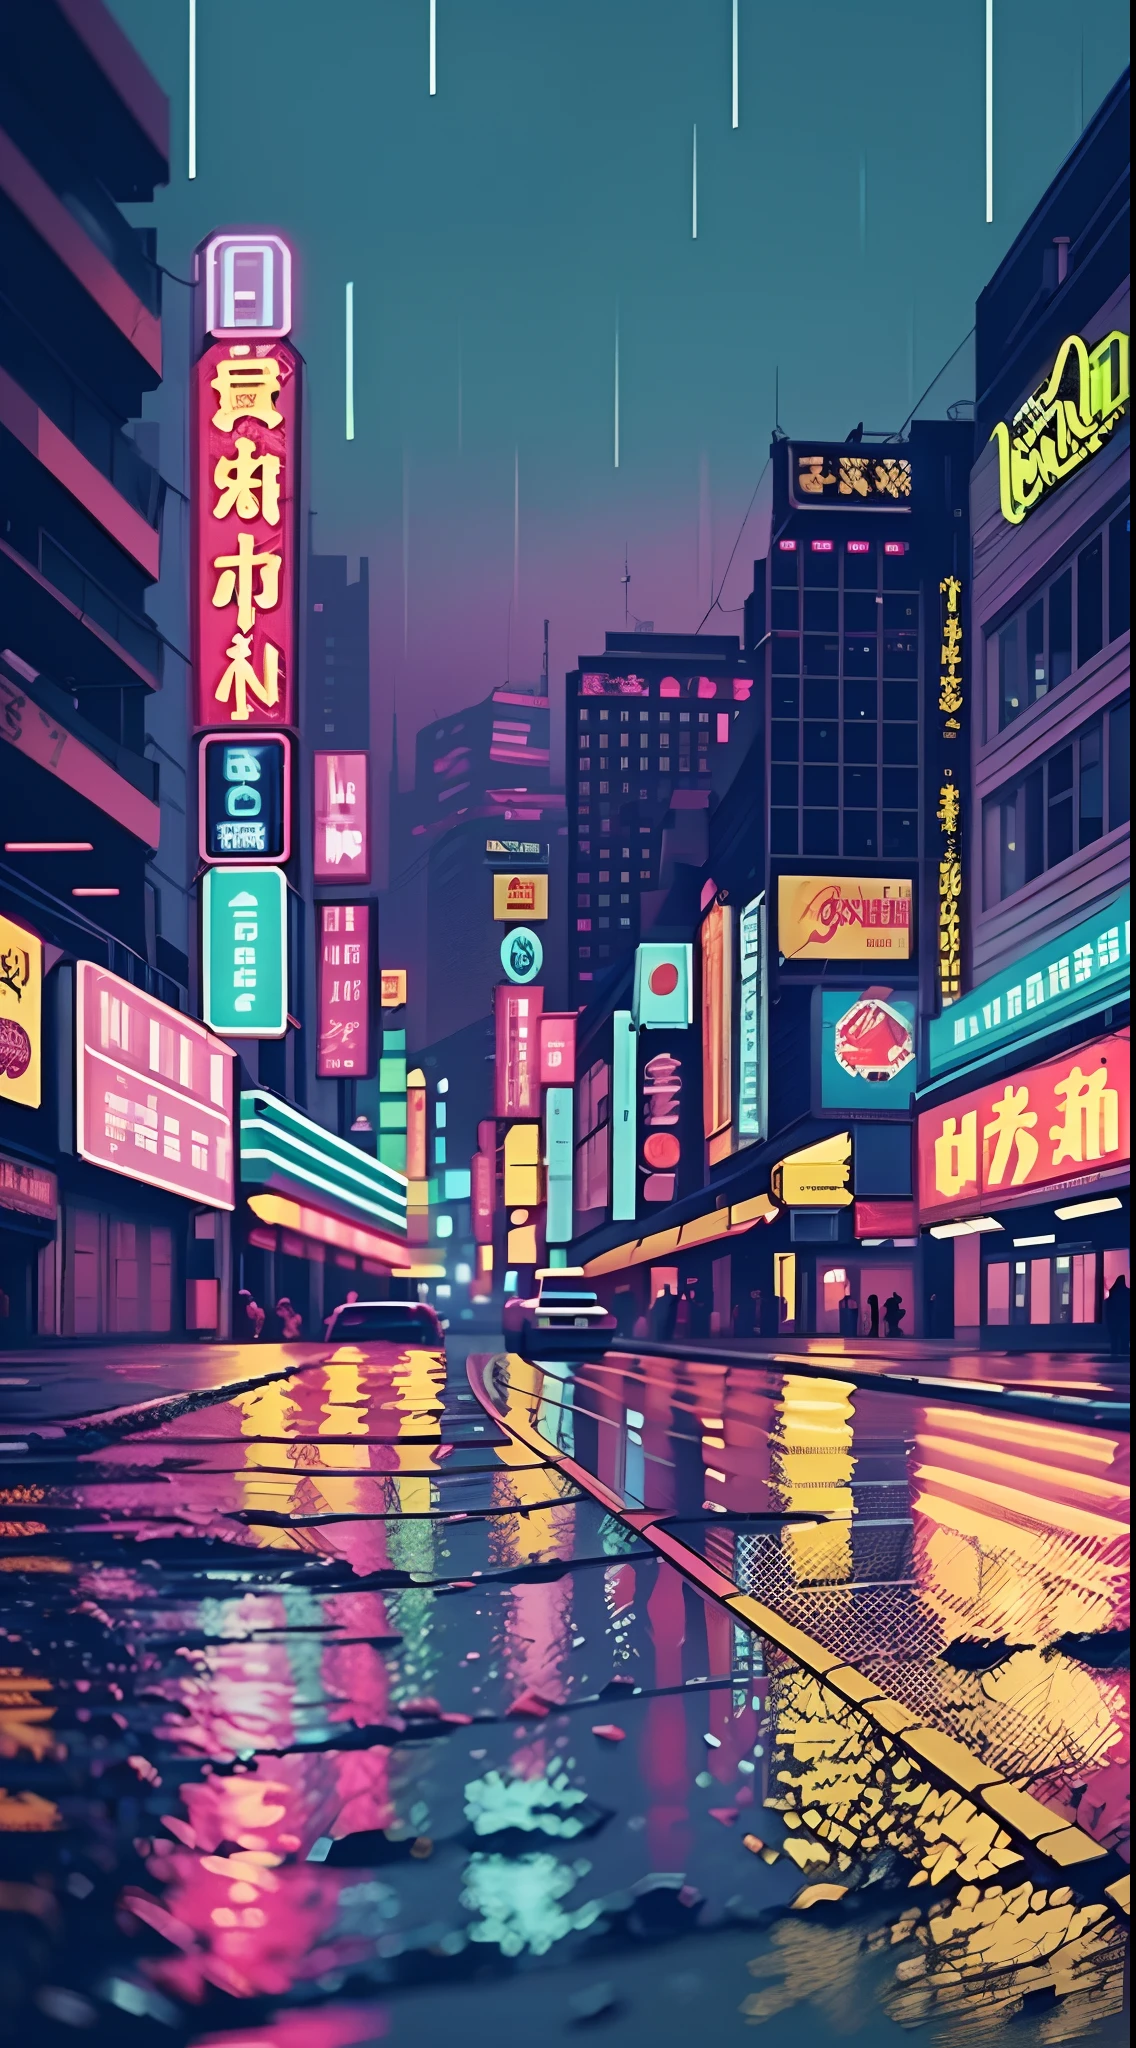 (bokeh effect), (dinamic angle), ((Masterpiece artwork)), (streets of tokyo), (zebracross), (Raby), (natta), empty city, tenebrosa, (neon), pixelart, ((pixelated)), cyberpunk, (retro)